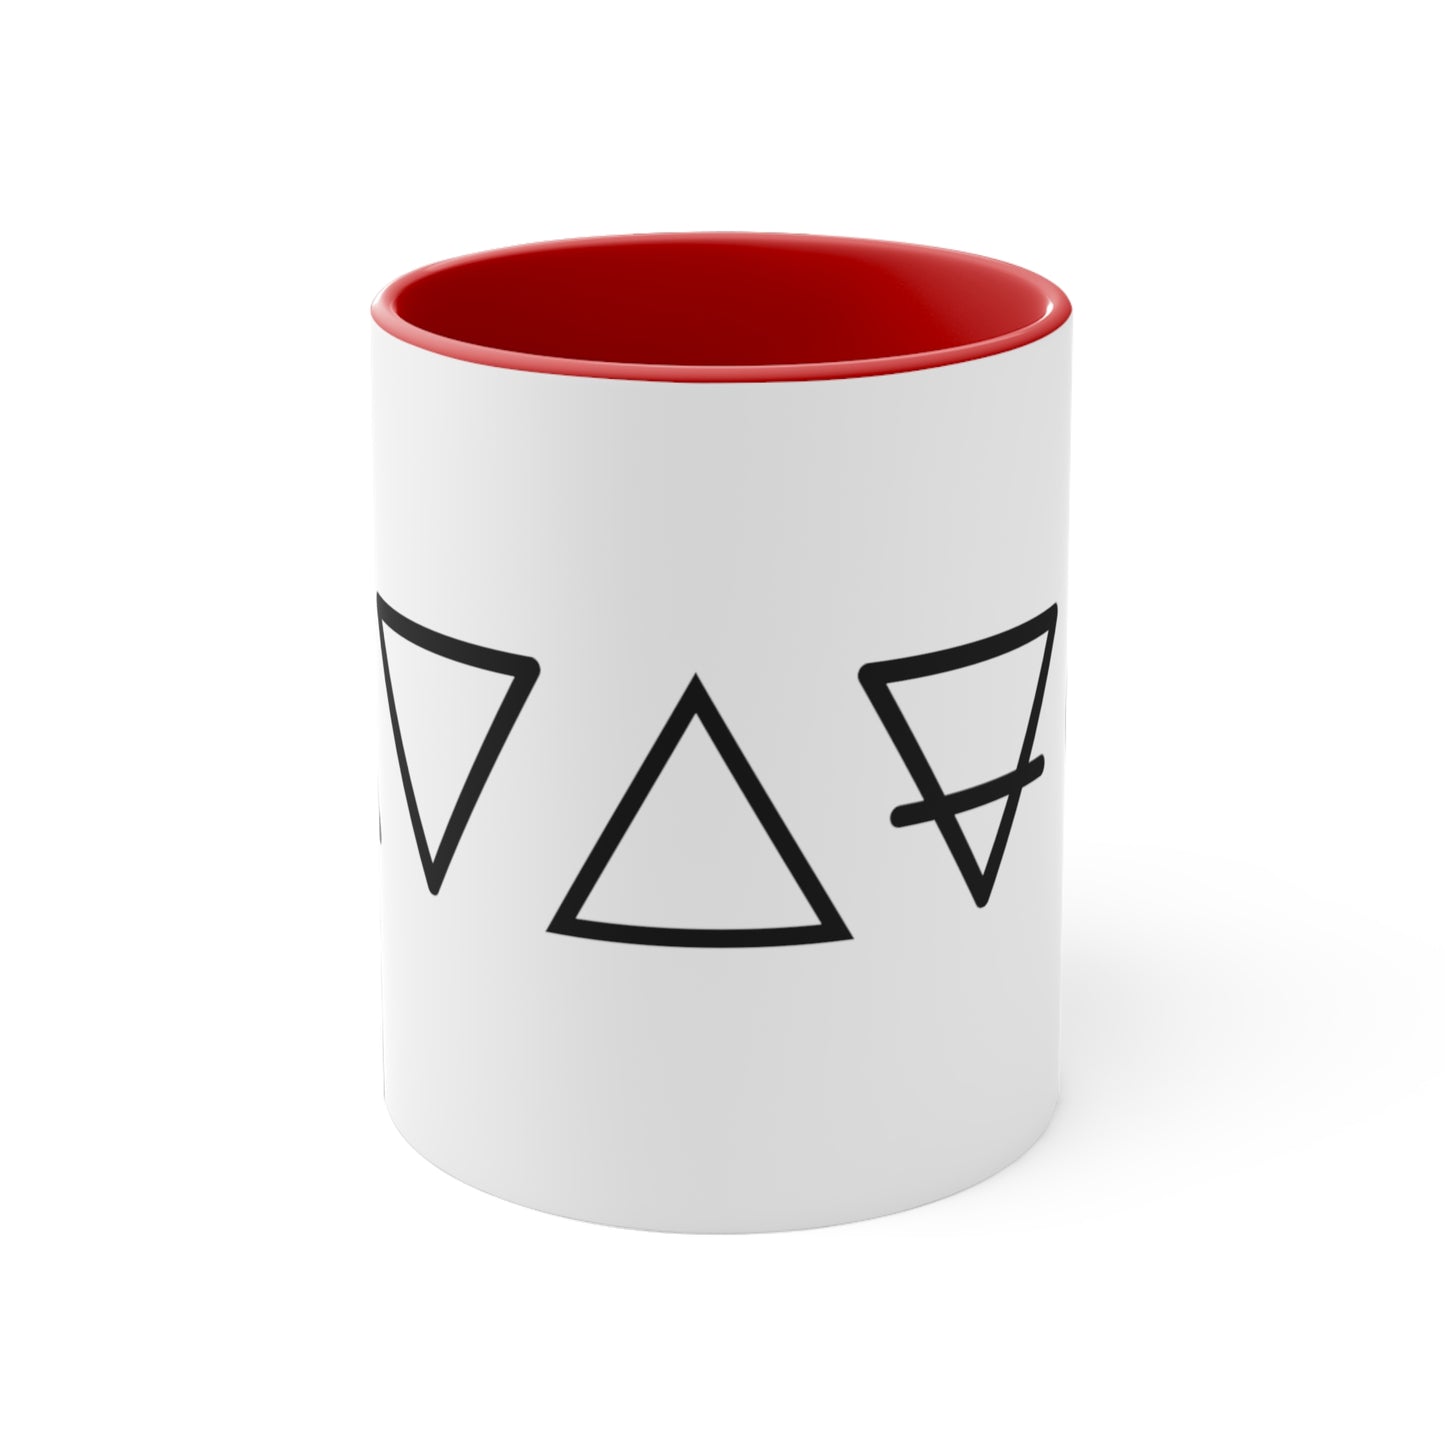 Elements Coffee Mug